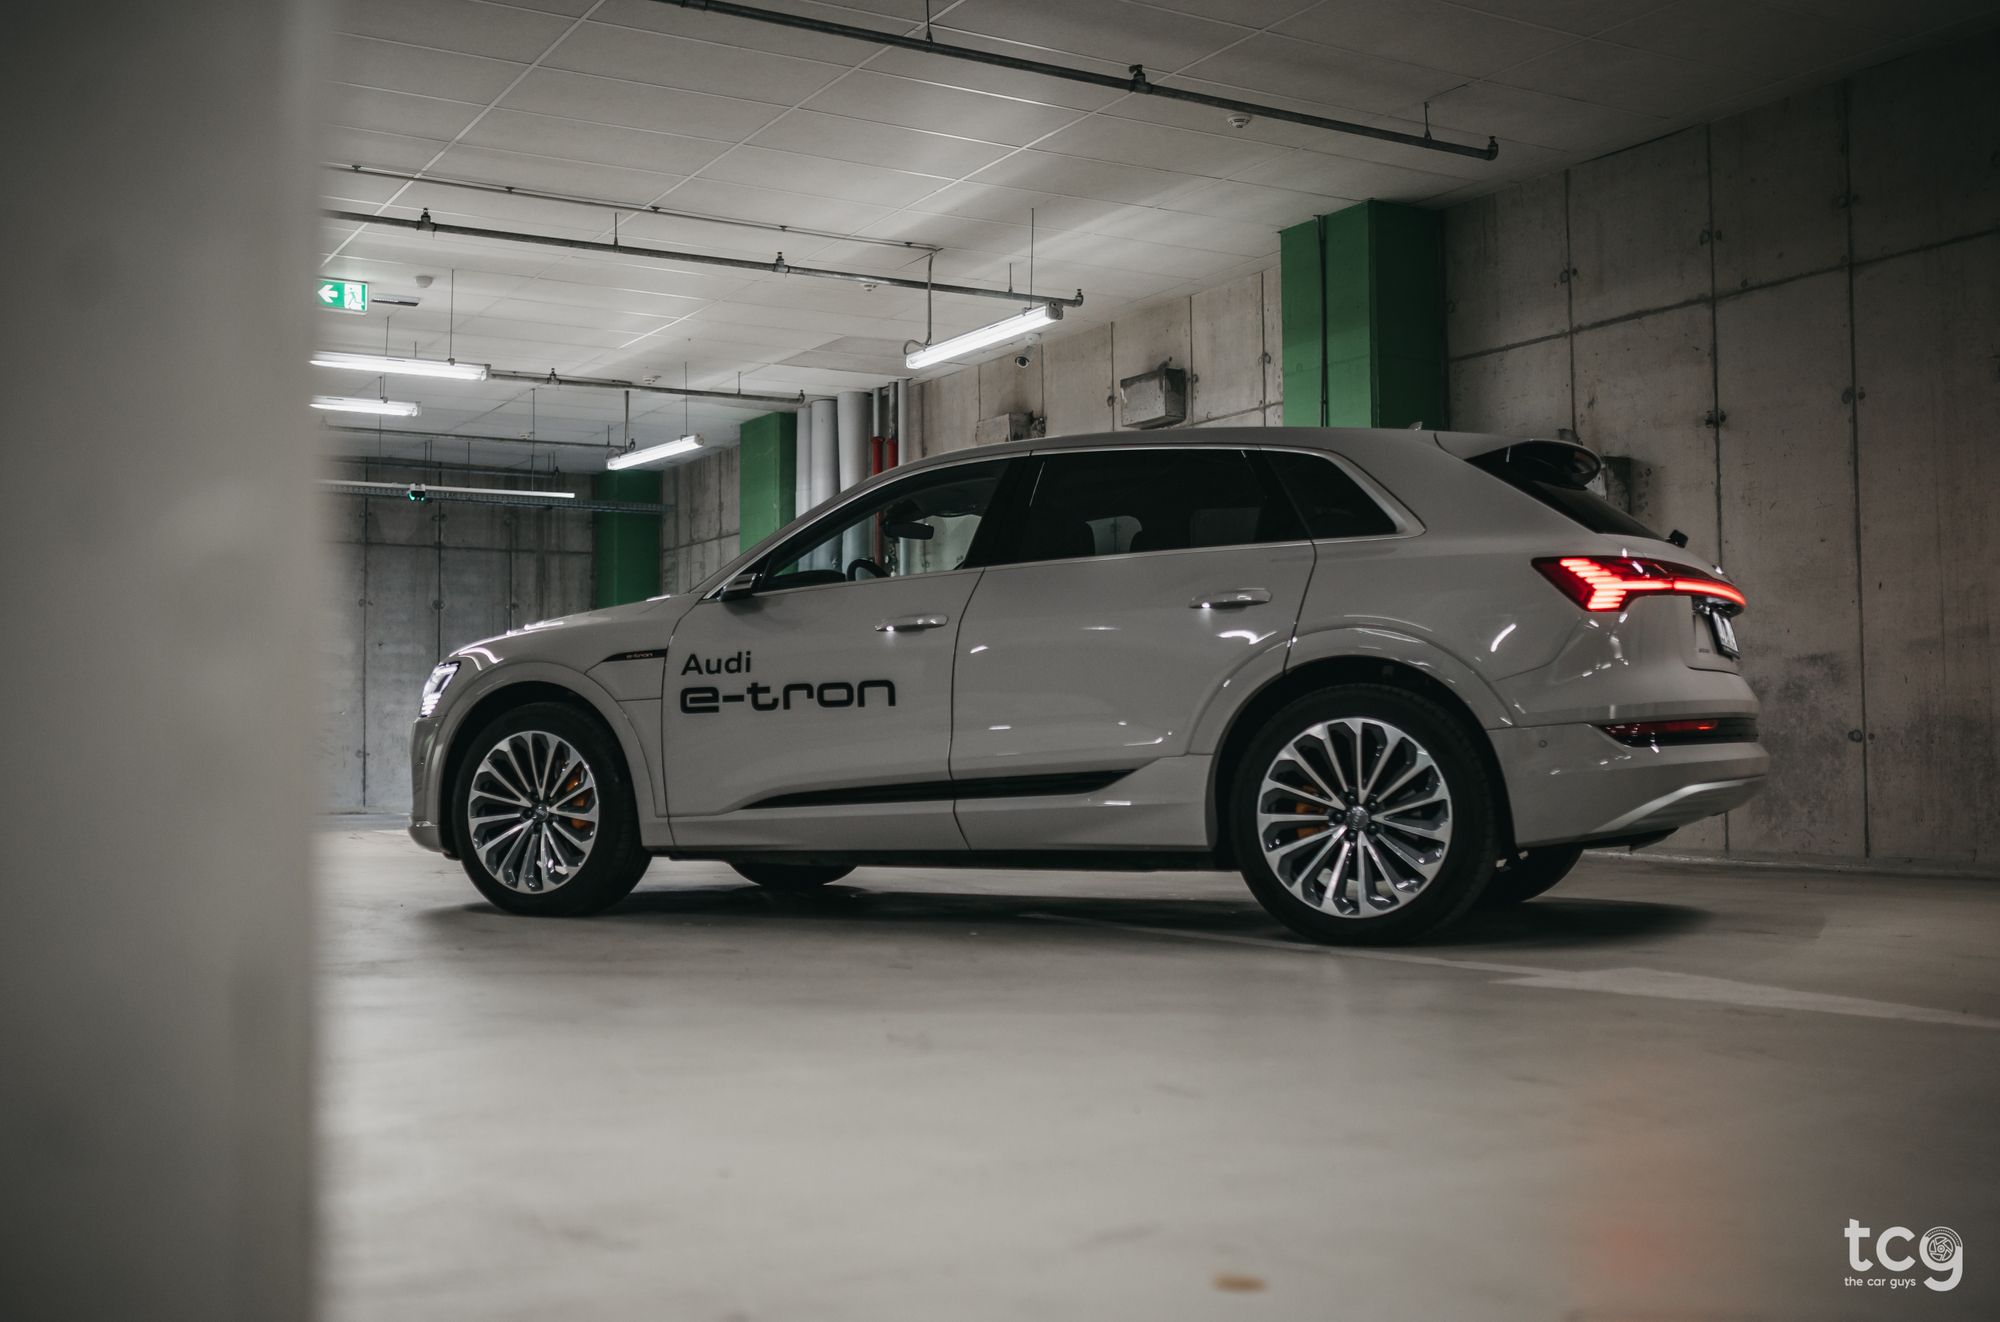 Audi e-tron - Audi's charge to electrification!